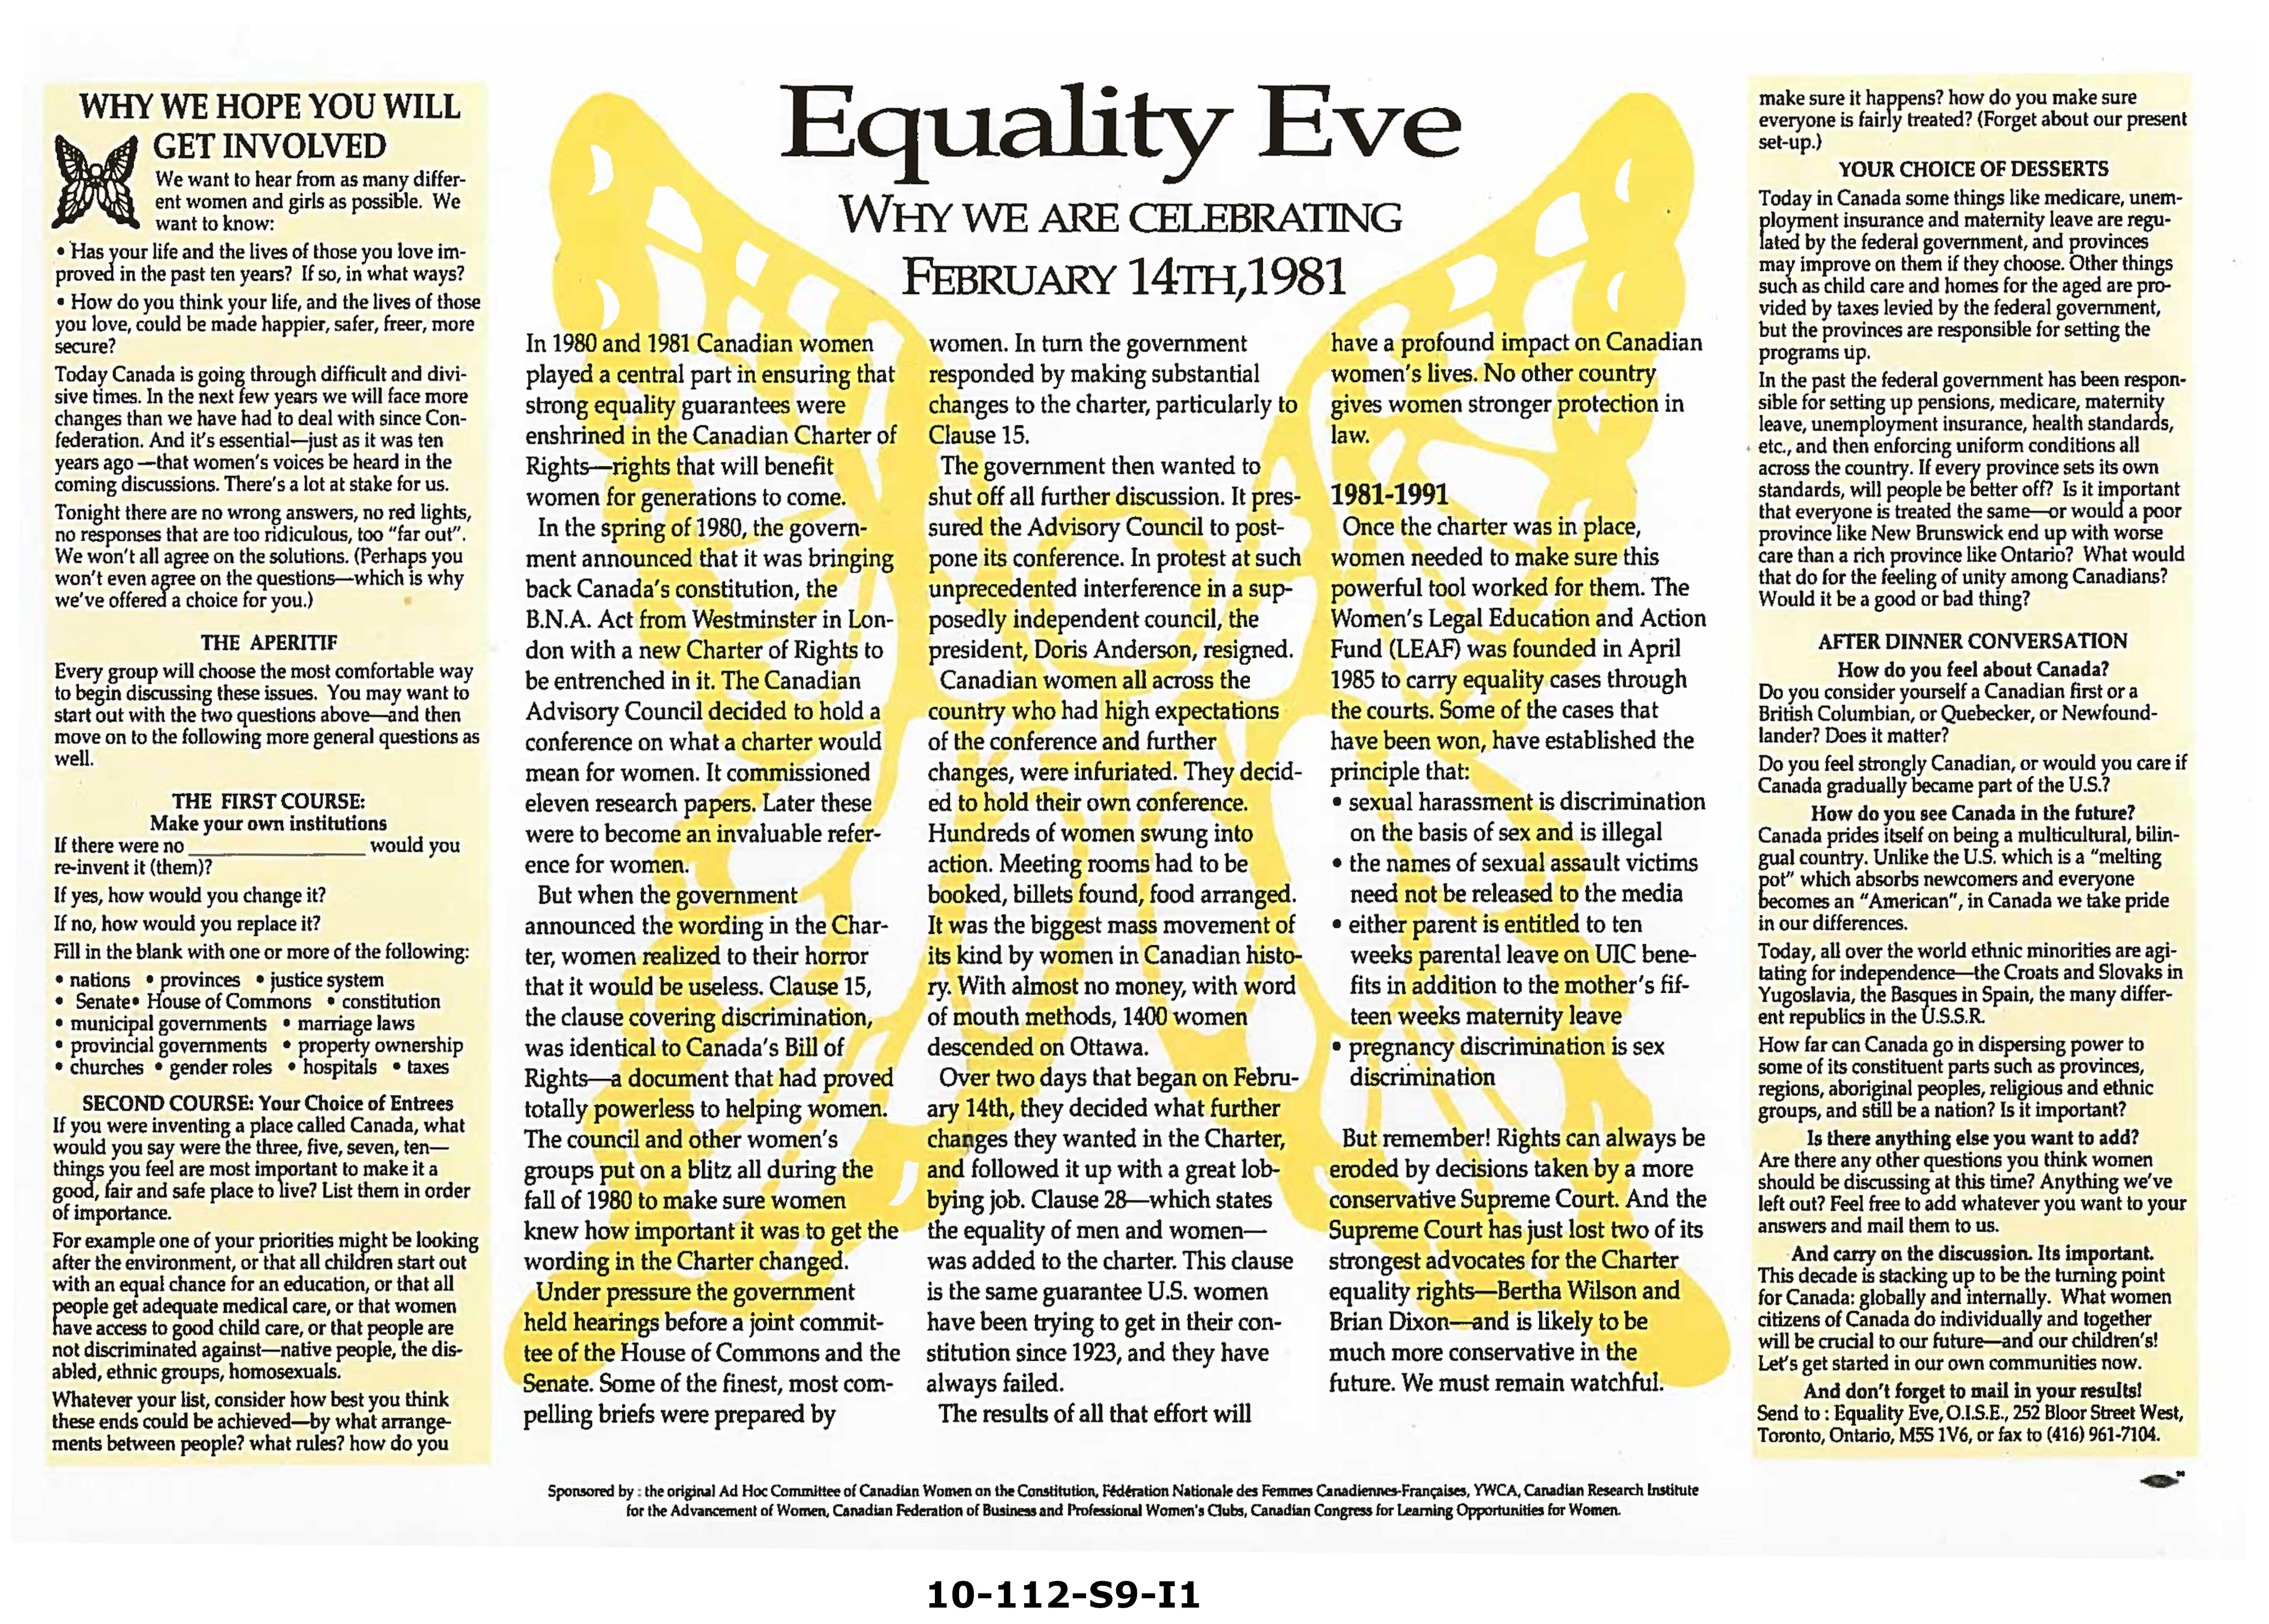 Equality Eve: Why we are celebrating February 14, 1981